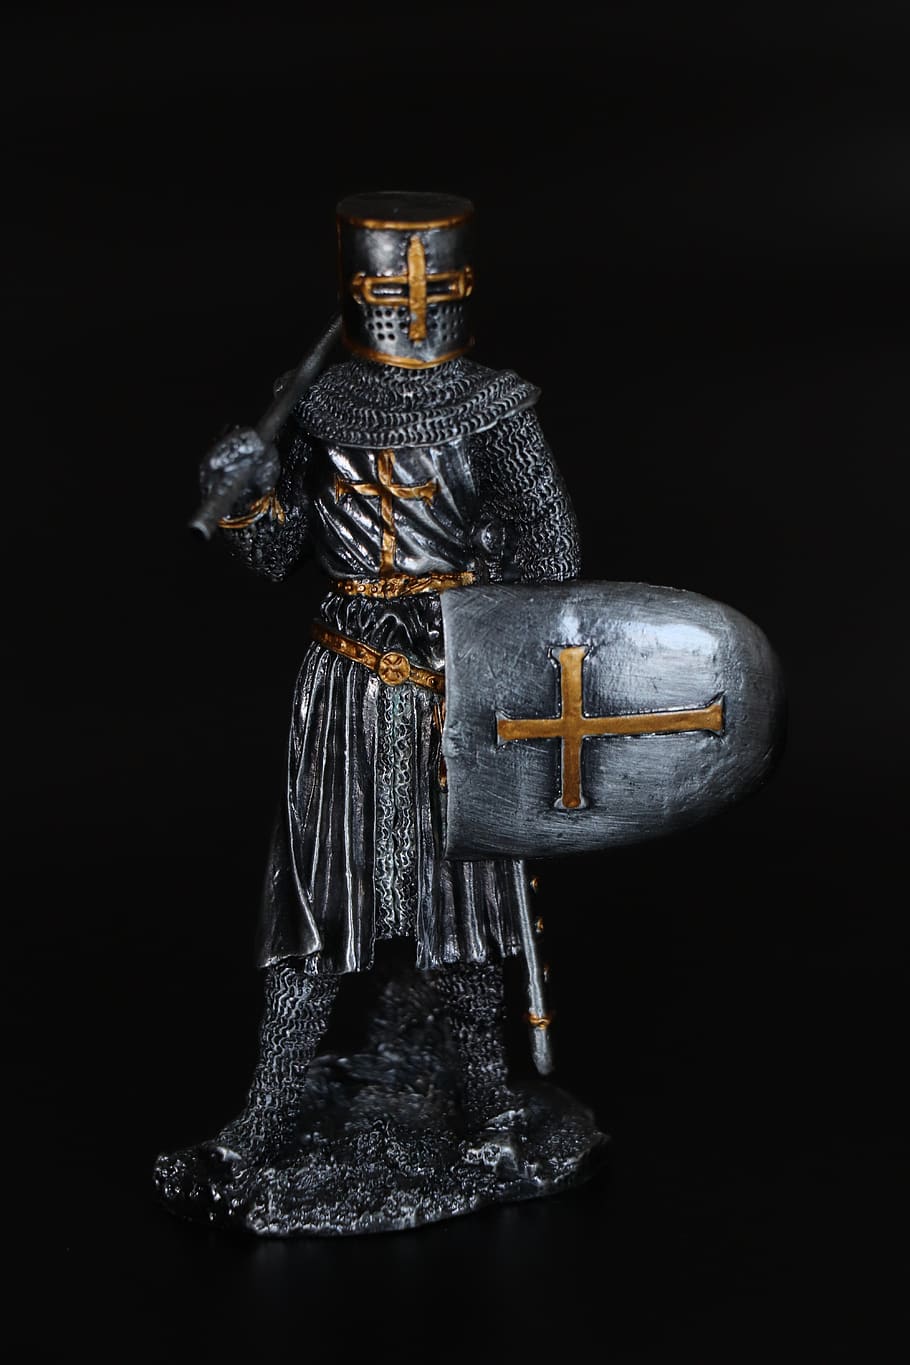 caballero, cruzado, espada, guerrero, medieval, soldado, escudo, protección, histórico, casco